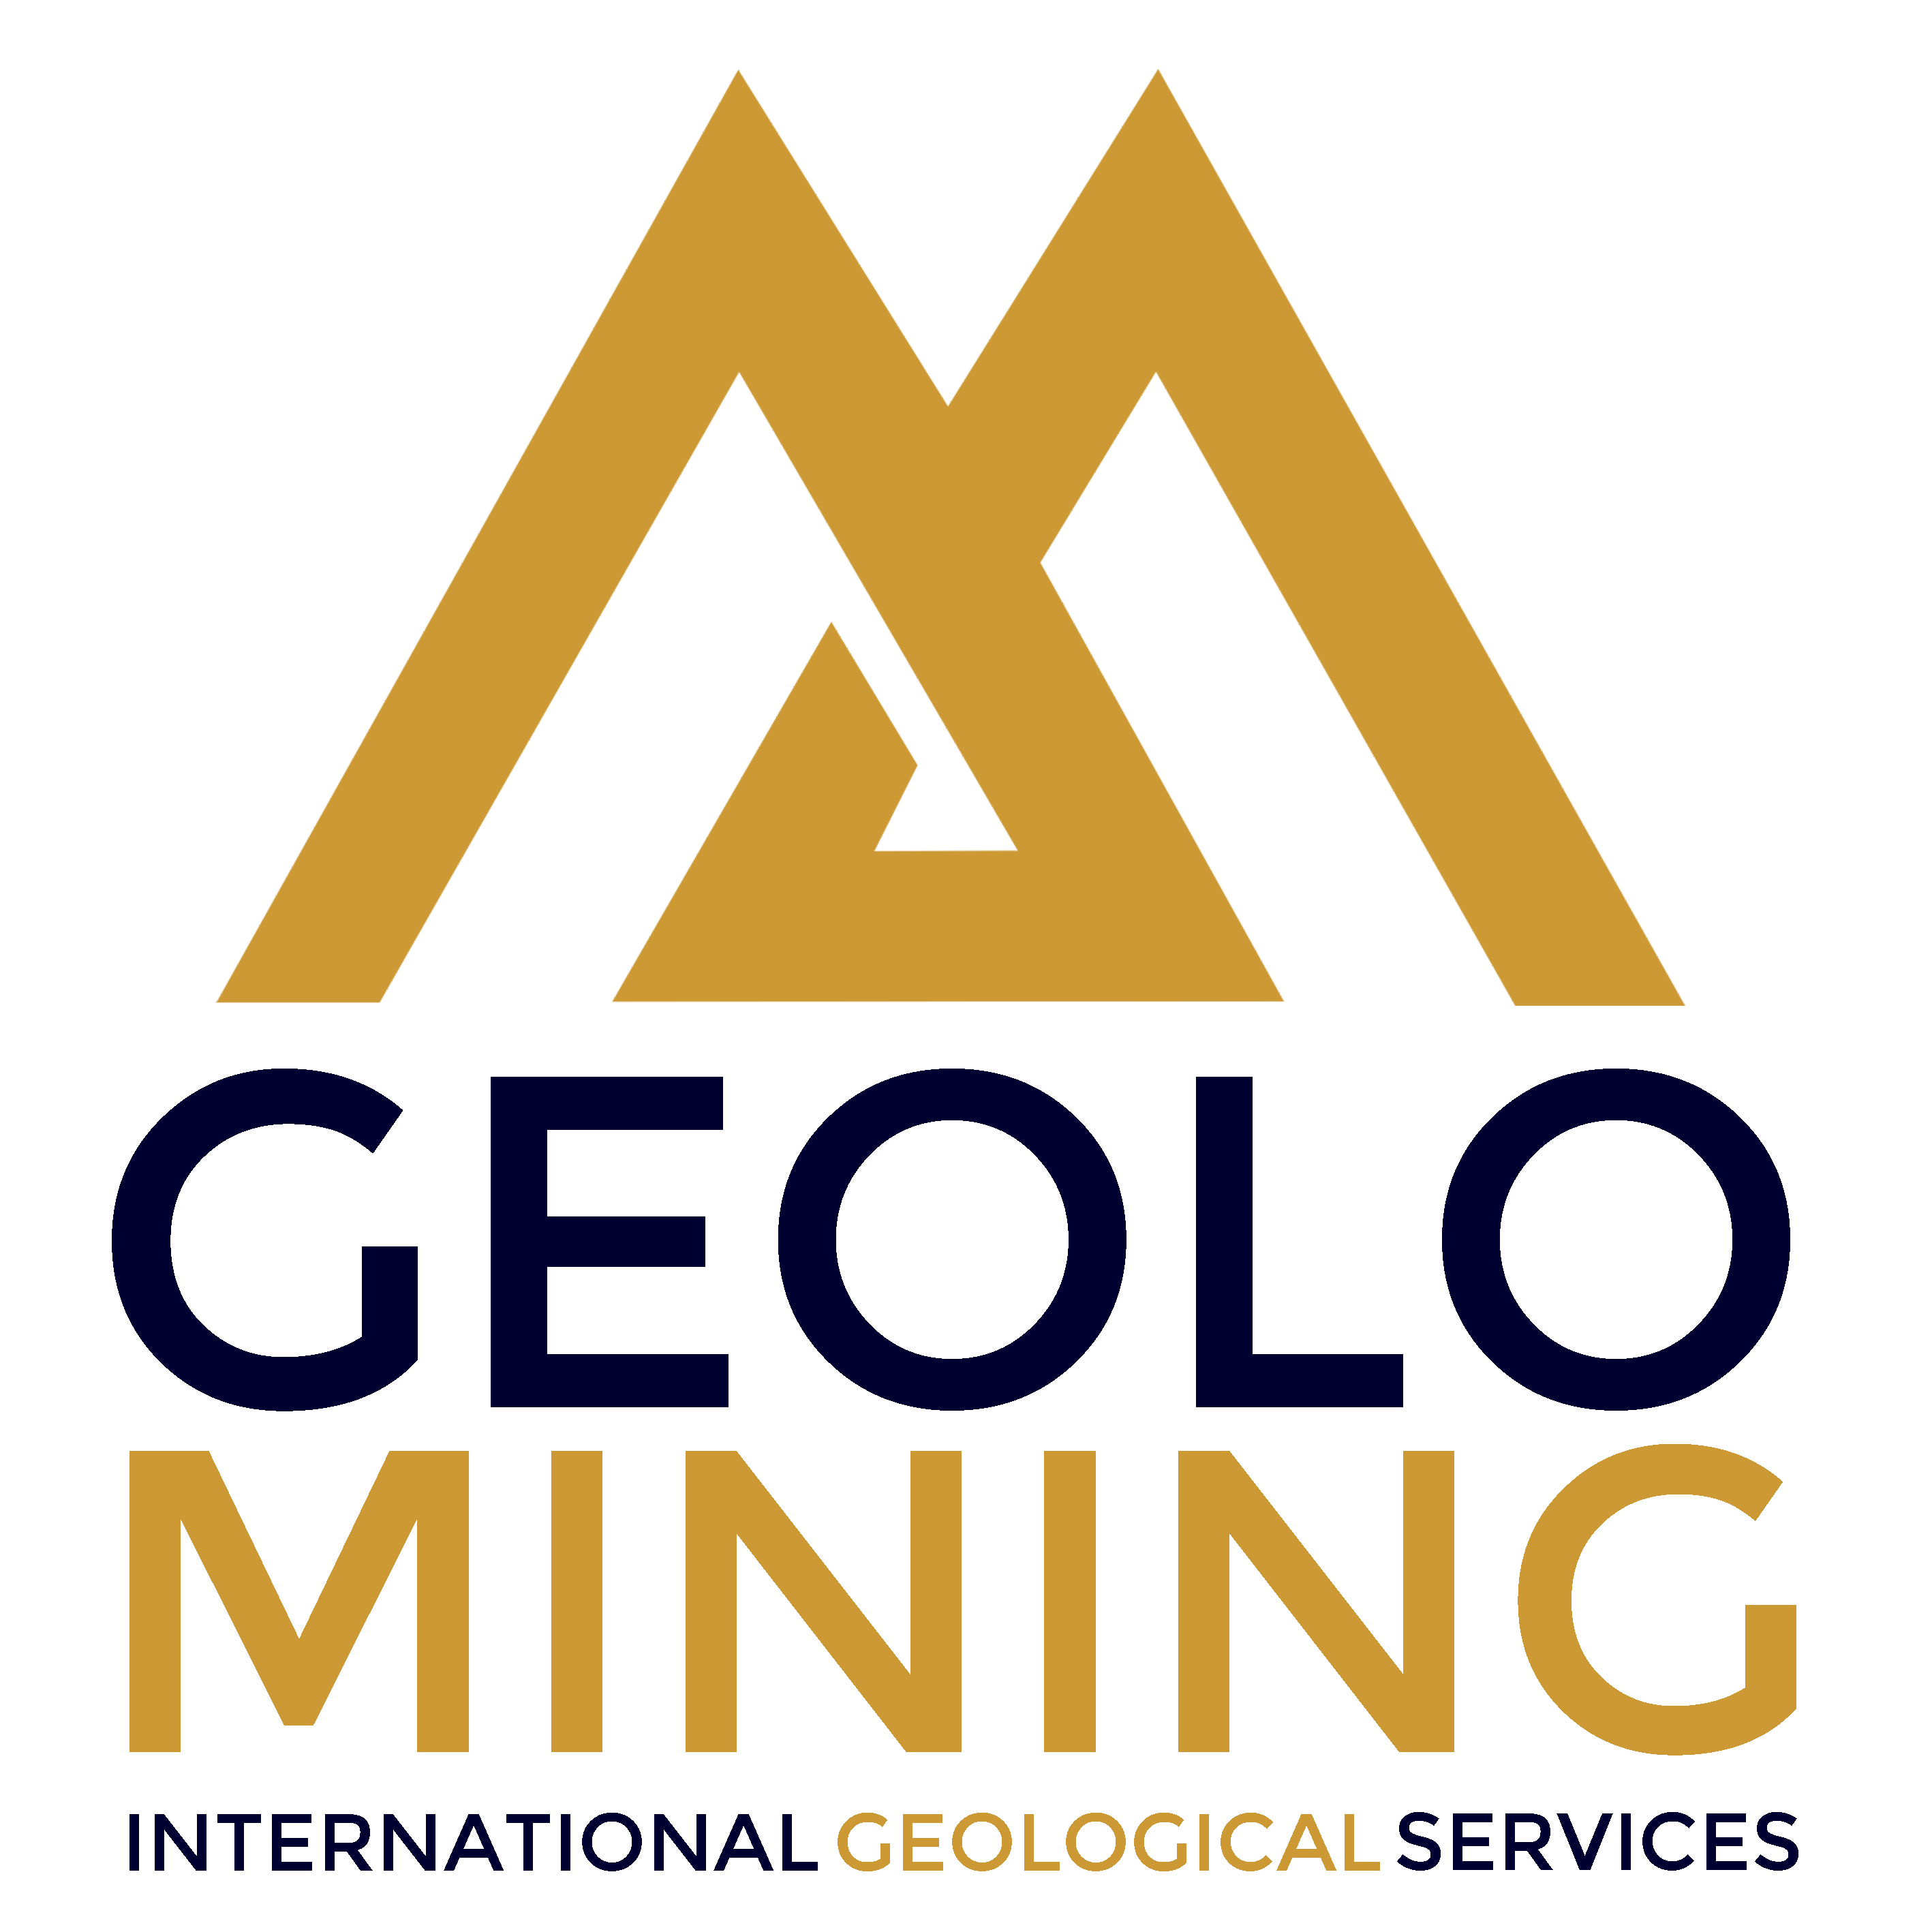 Geolomining